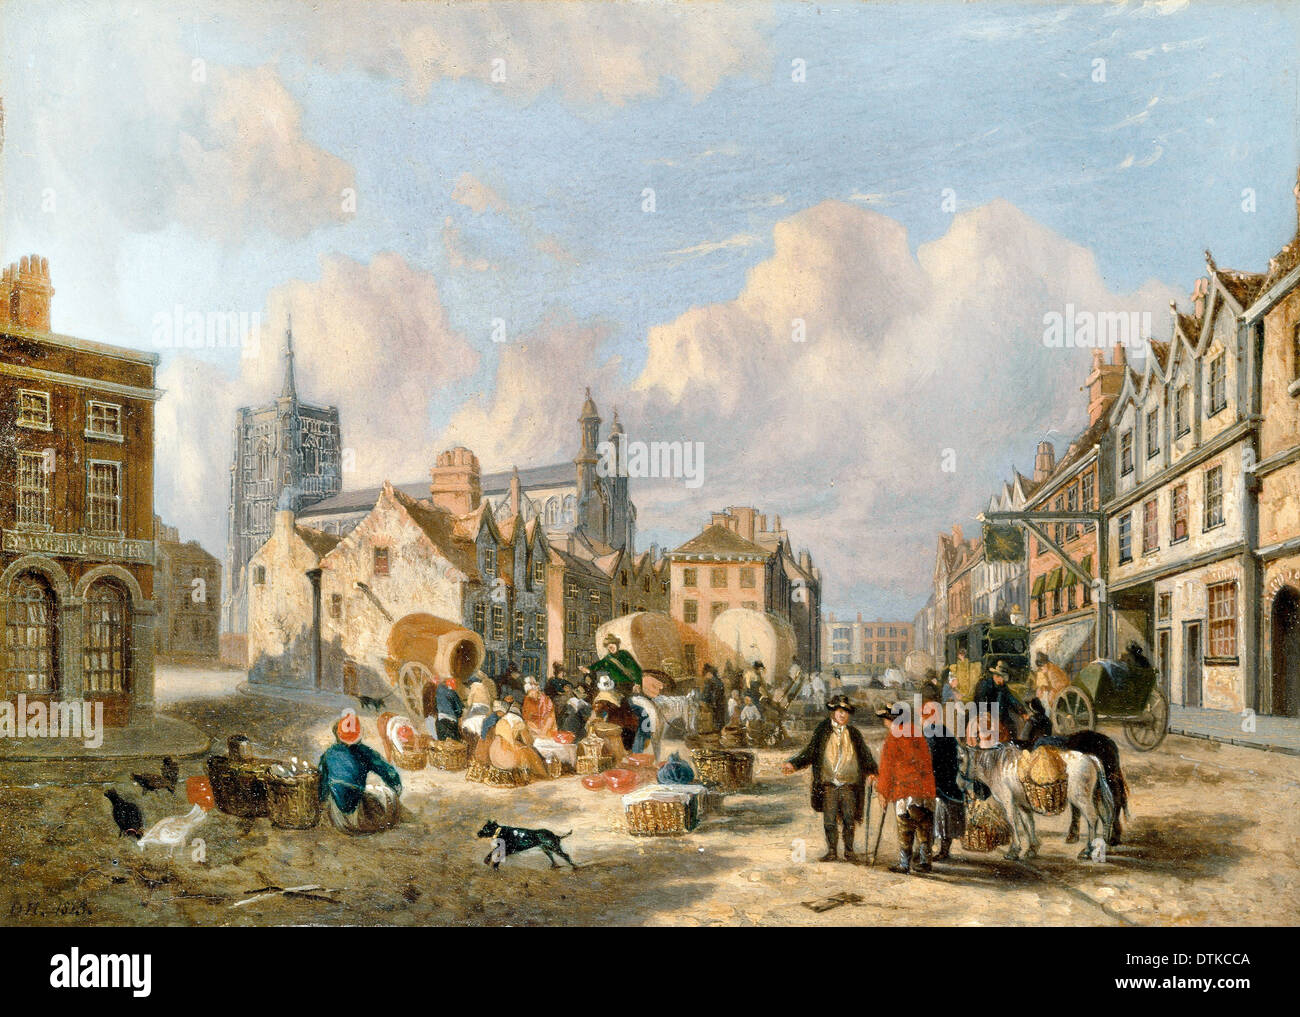 David Hodgson, The Haymarket, Norwich 1825 Oil on canvas. Yale Center for British Art, New Haven, USA. Stock Photo